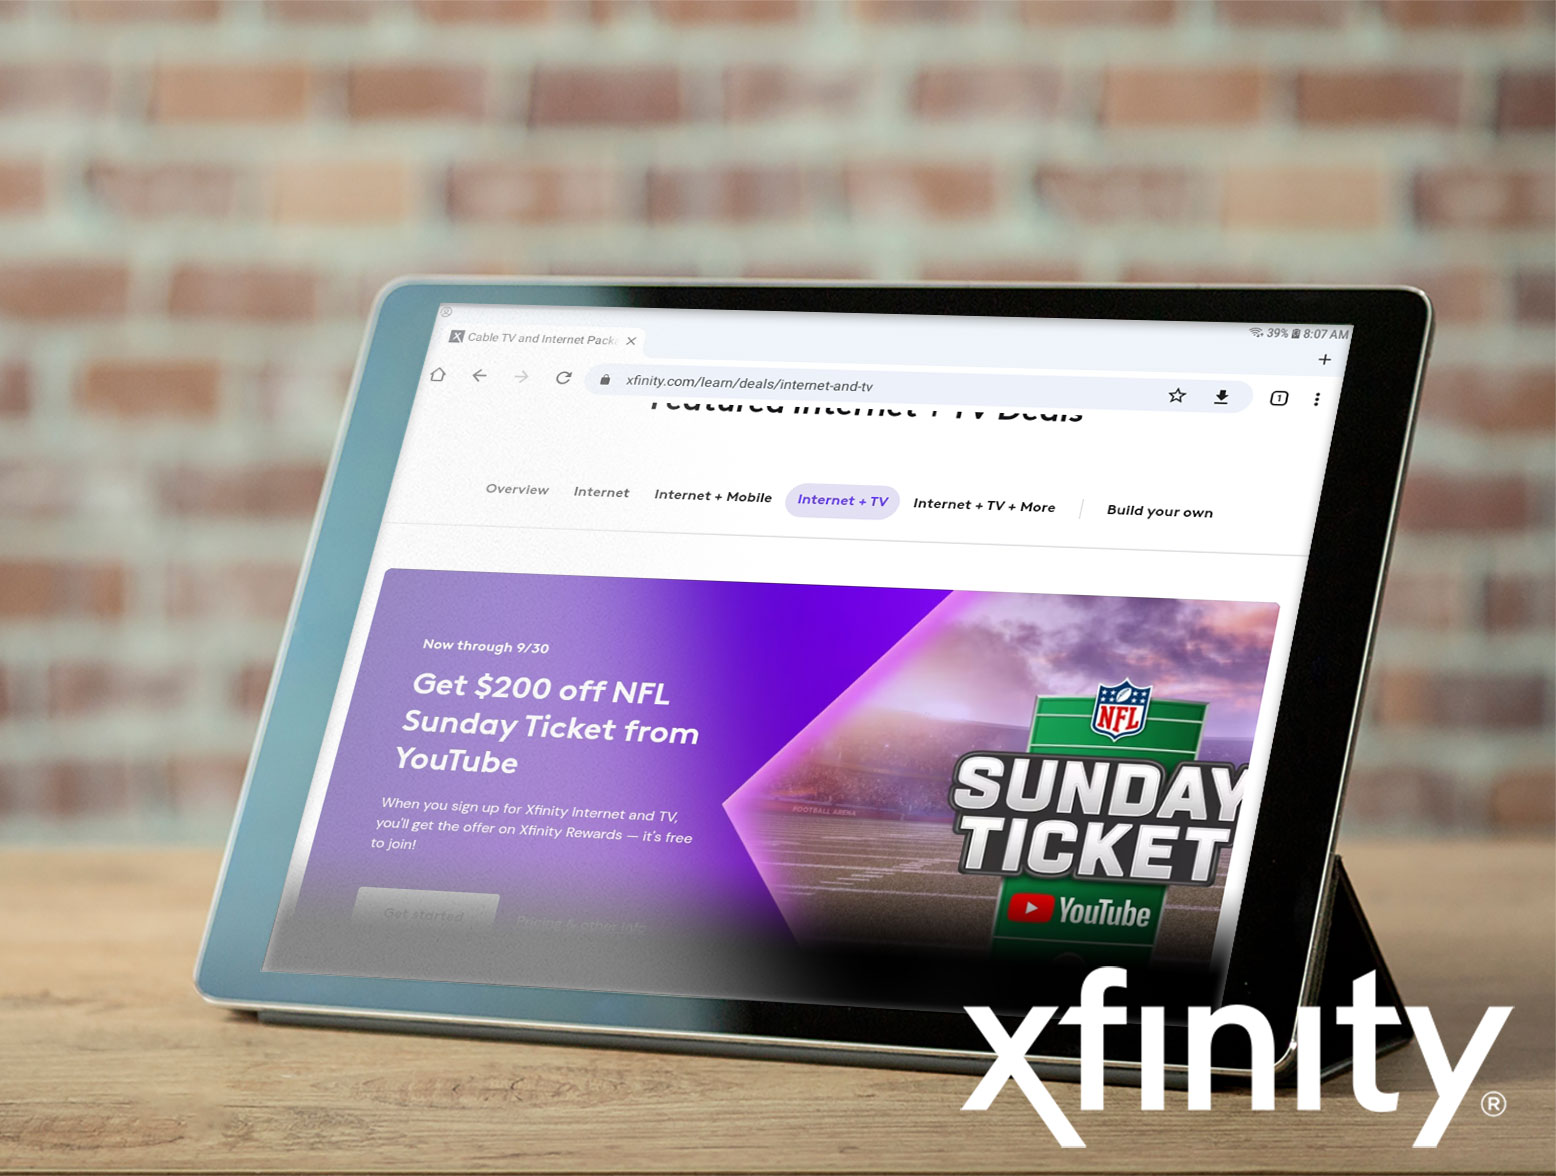 NFL Sunday Ticket: Comcast's Xfinity Rewards Members Can Get $200